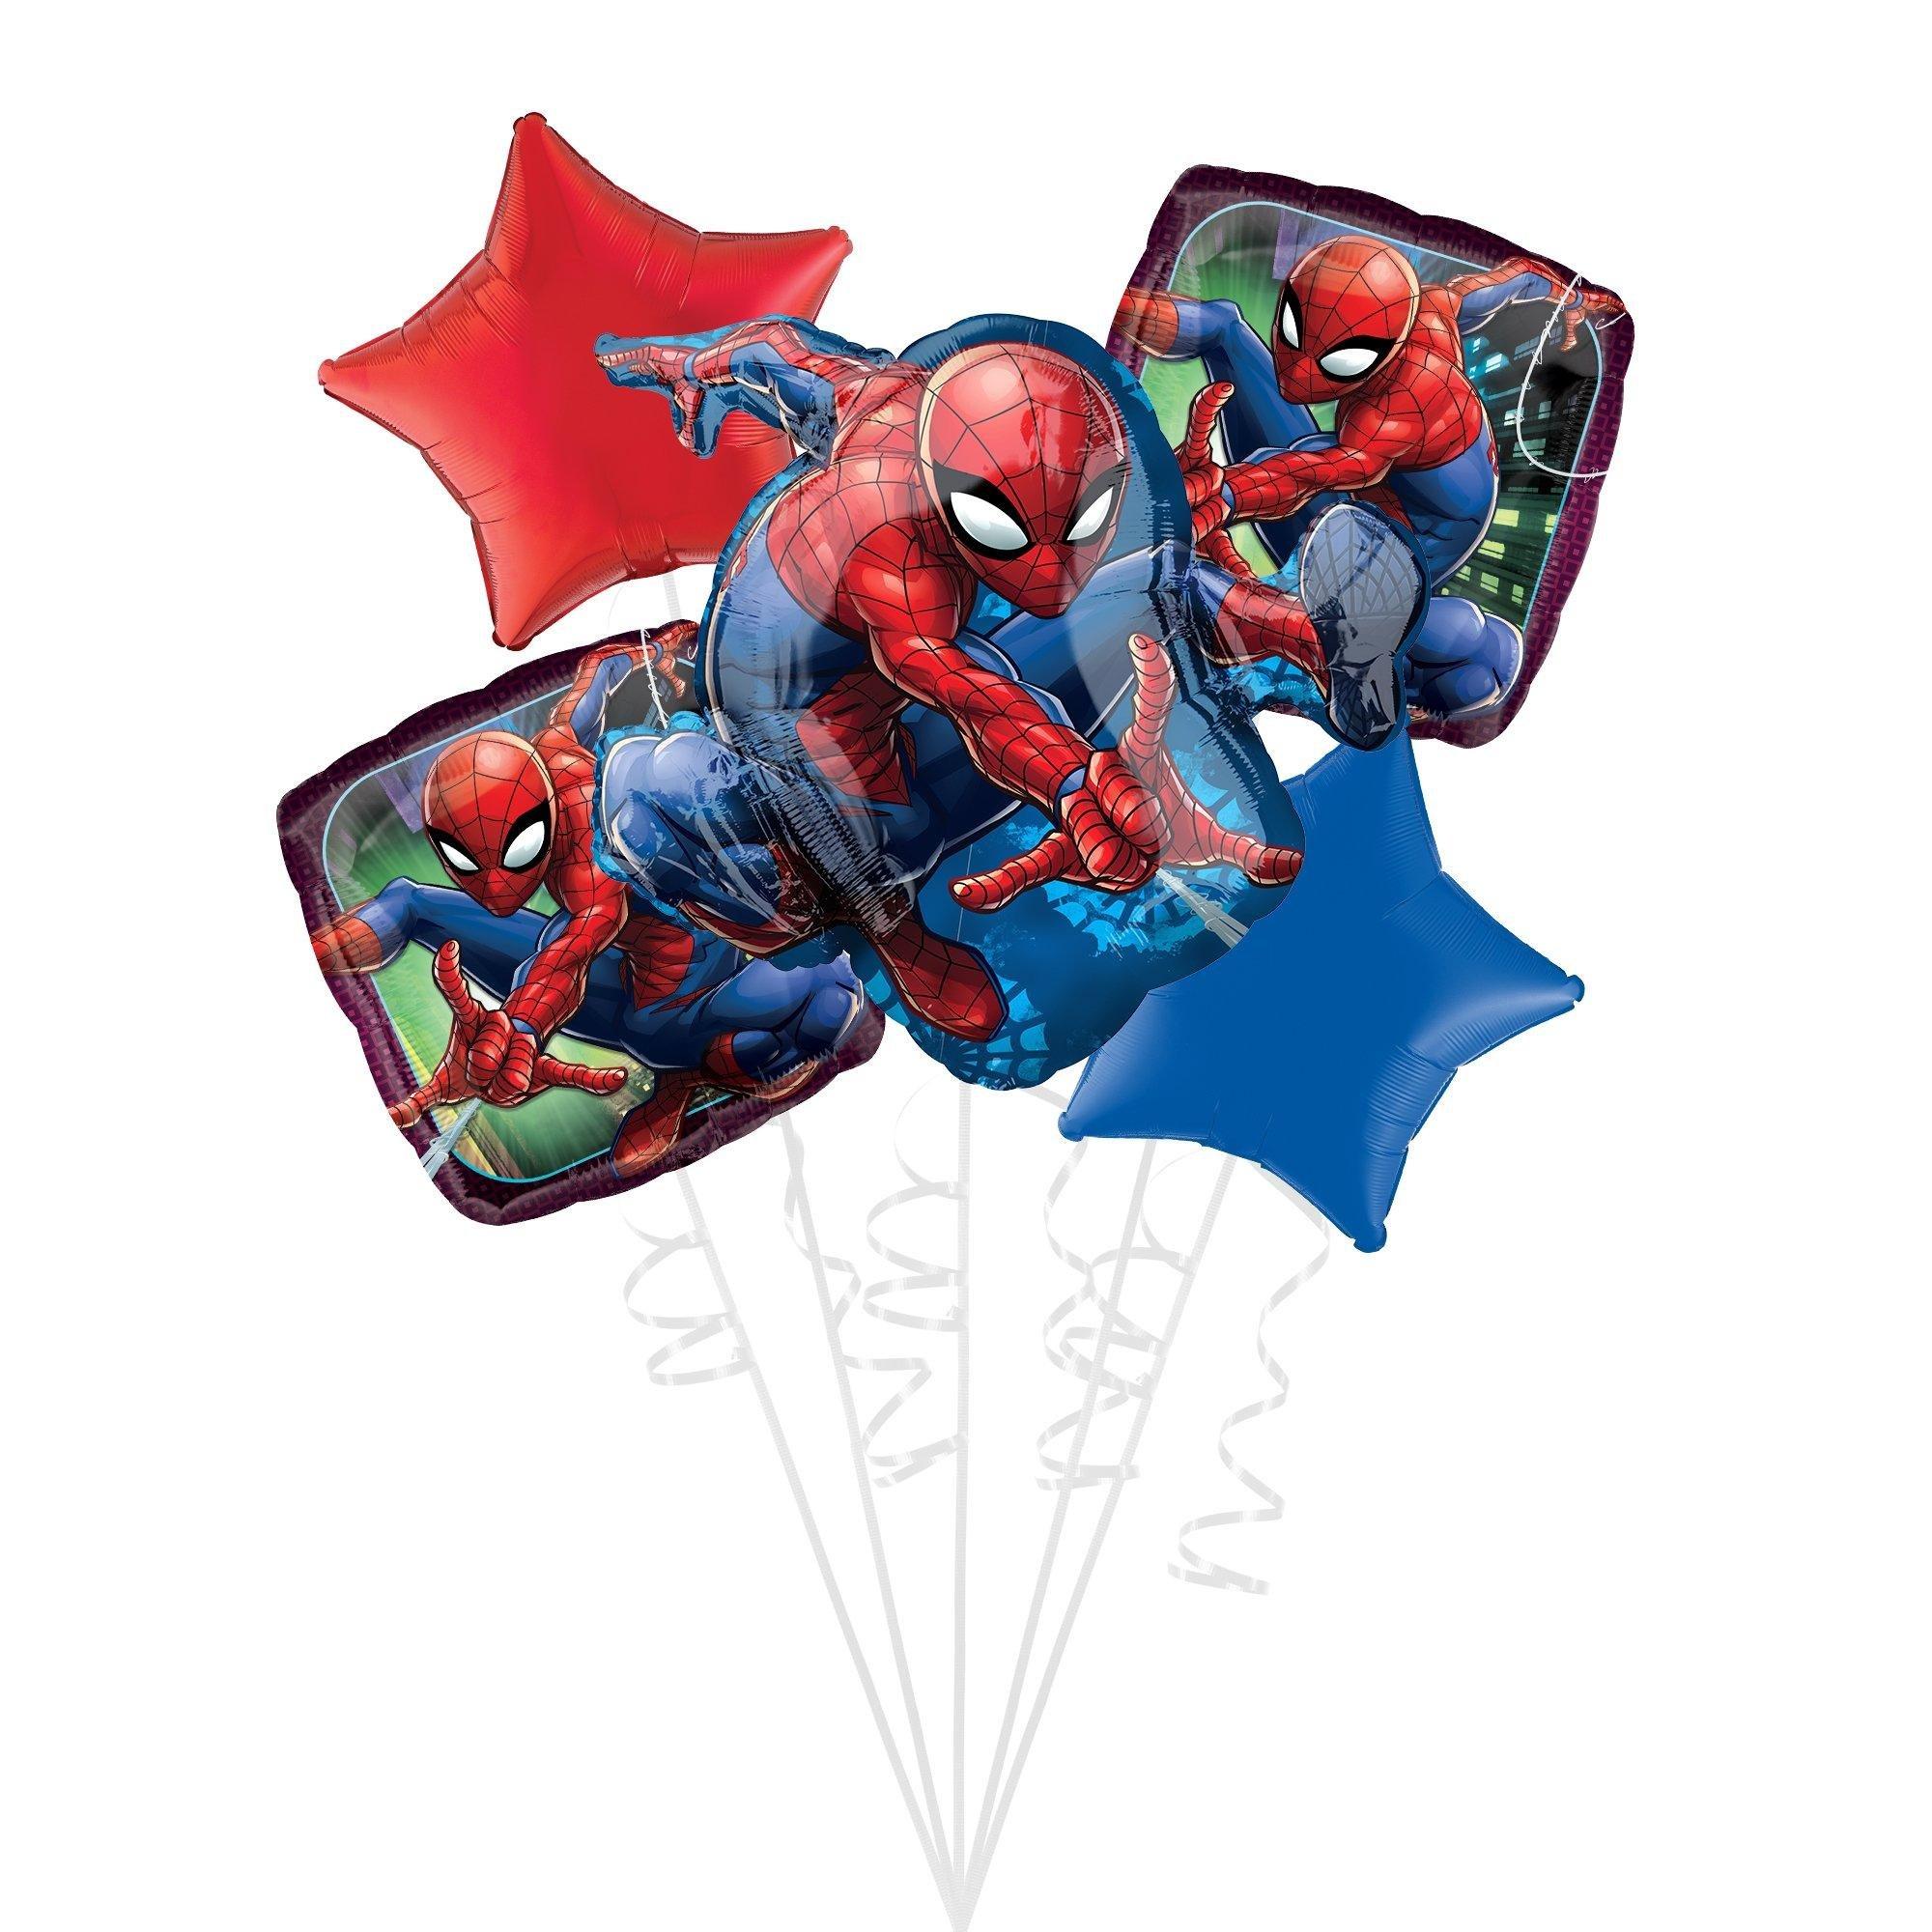 Spiderman Cake Decoration Kit, 17pc 